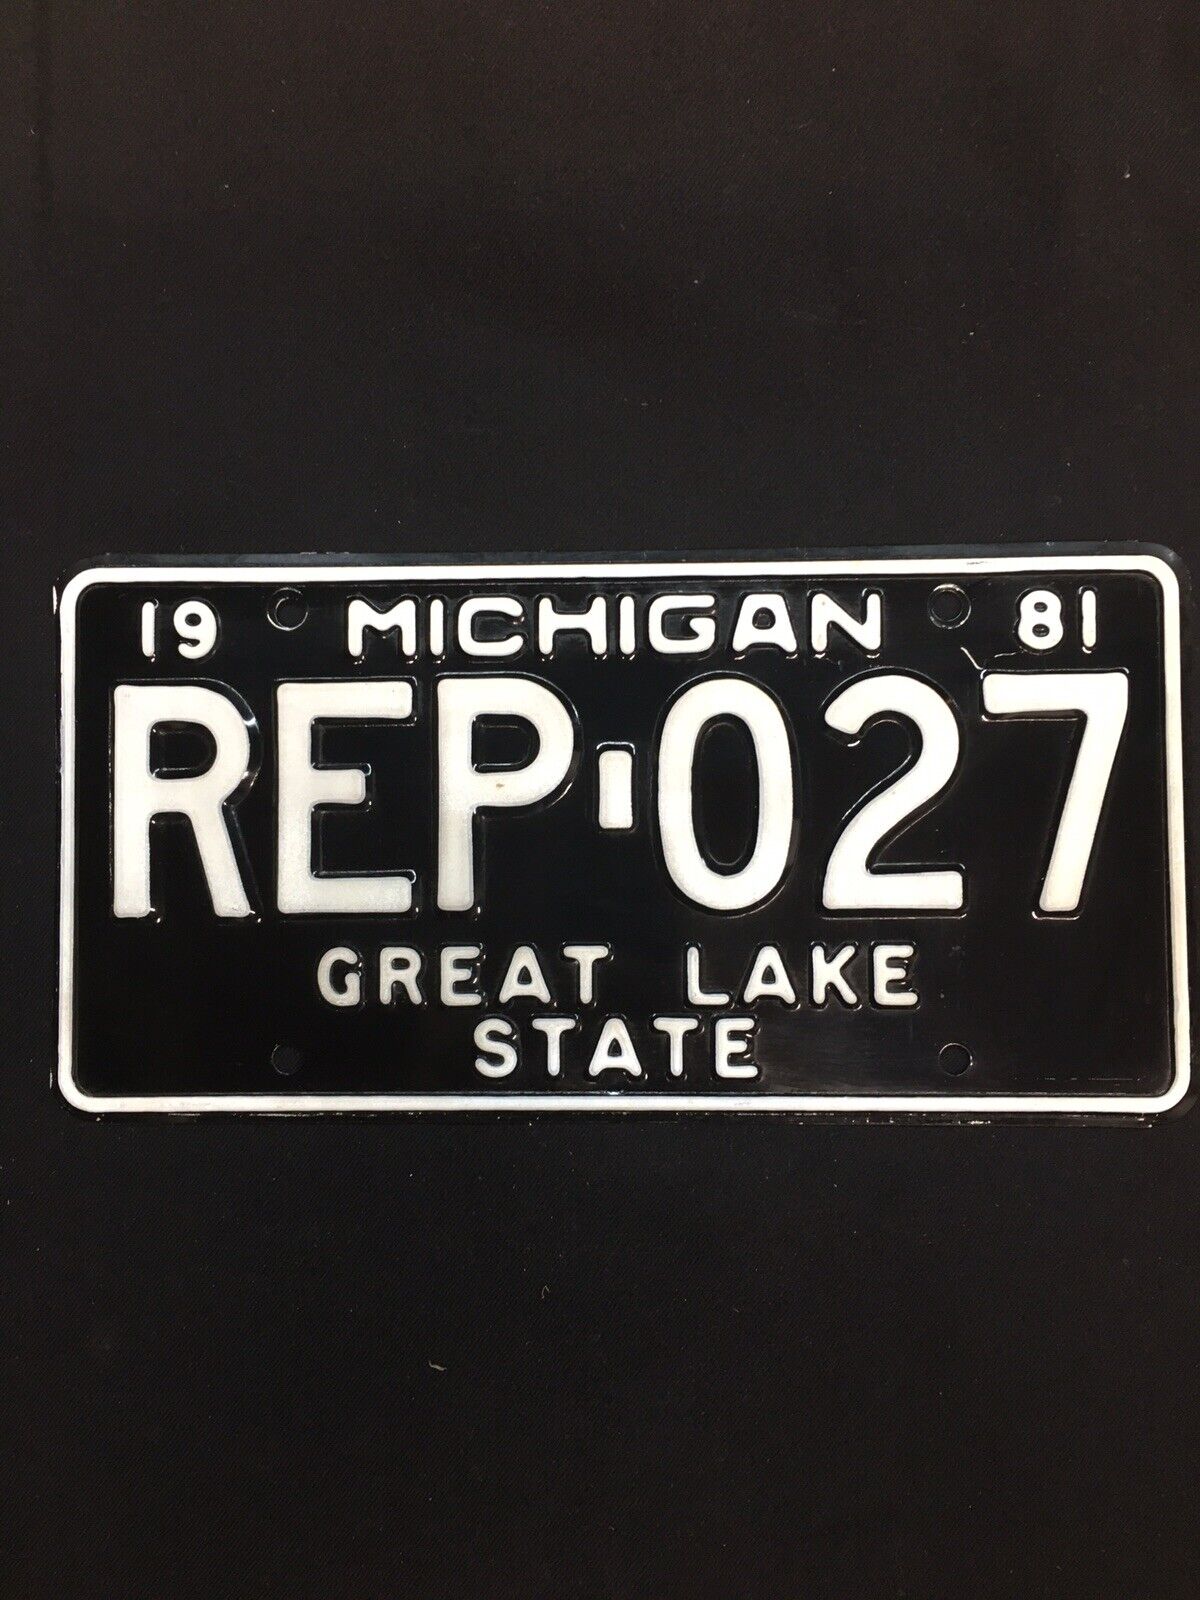 1981 Michigan black and white- Great Lake State￼ sample license plate REP 027